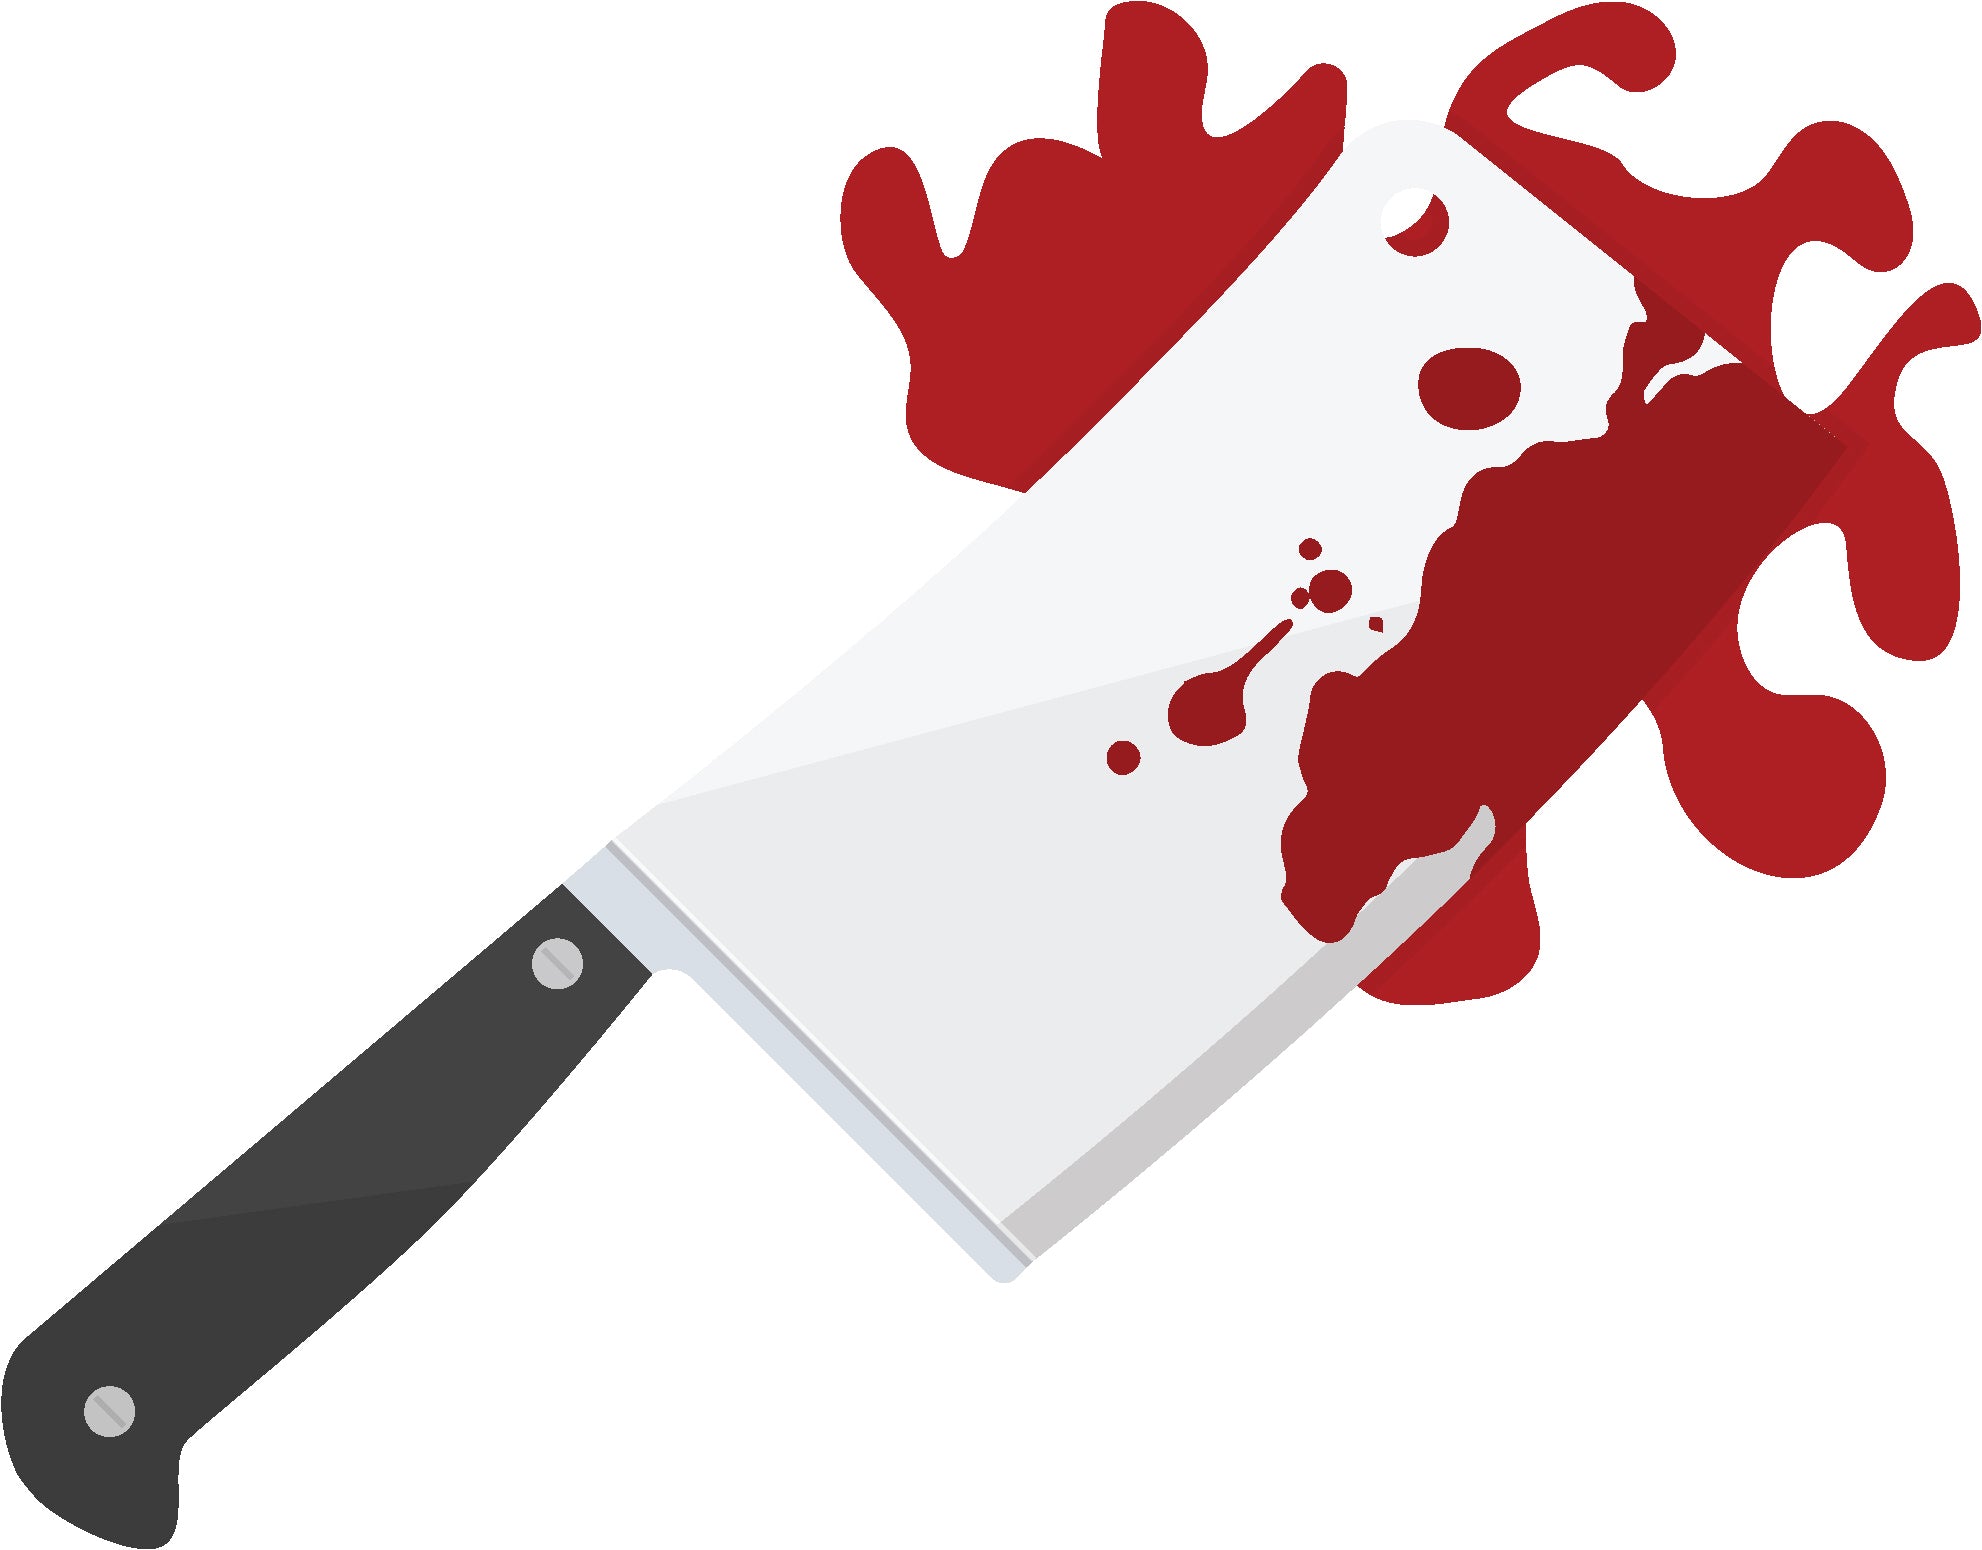 Creepy Bloody Murder Knife Cartoon #3 Vinyl Decal Sticker